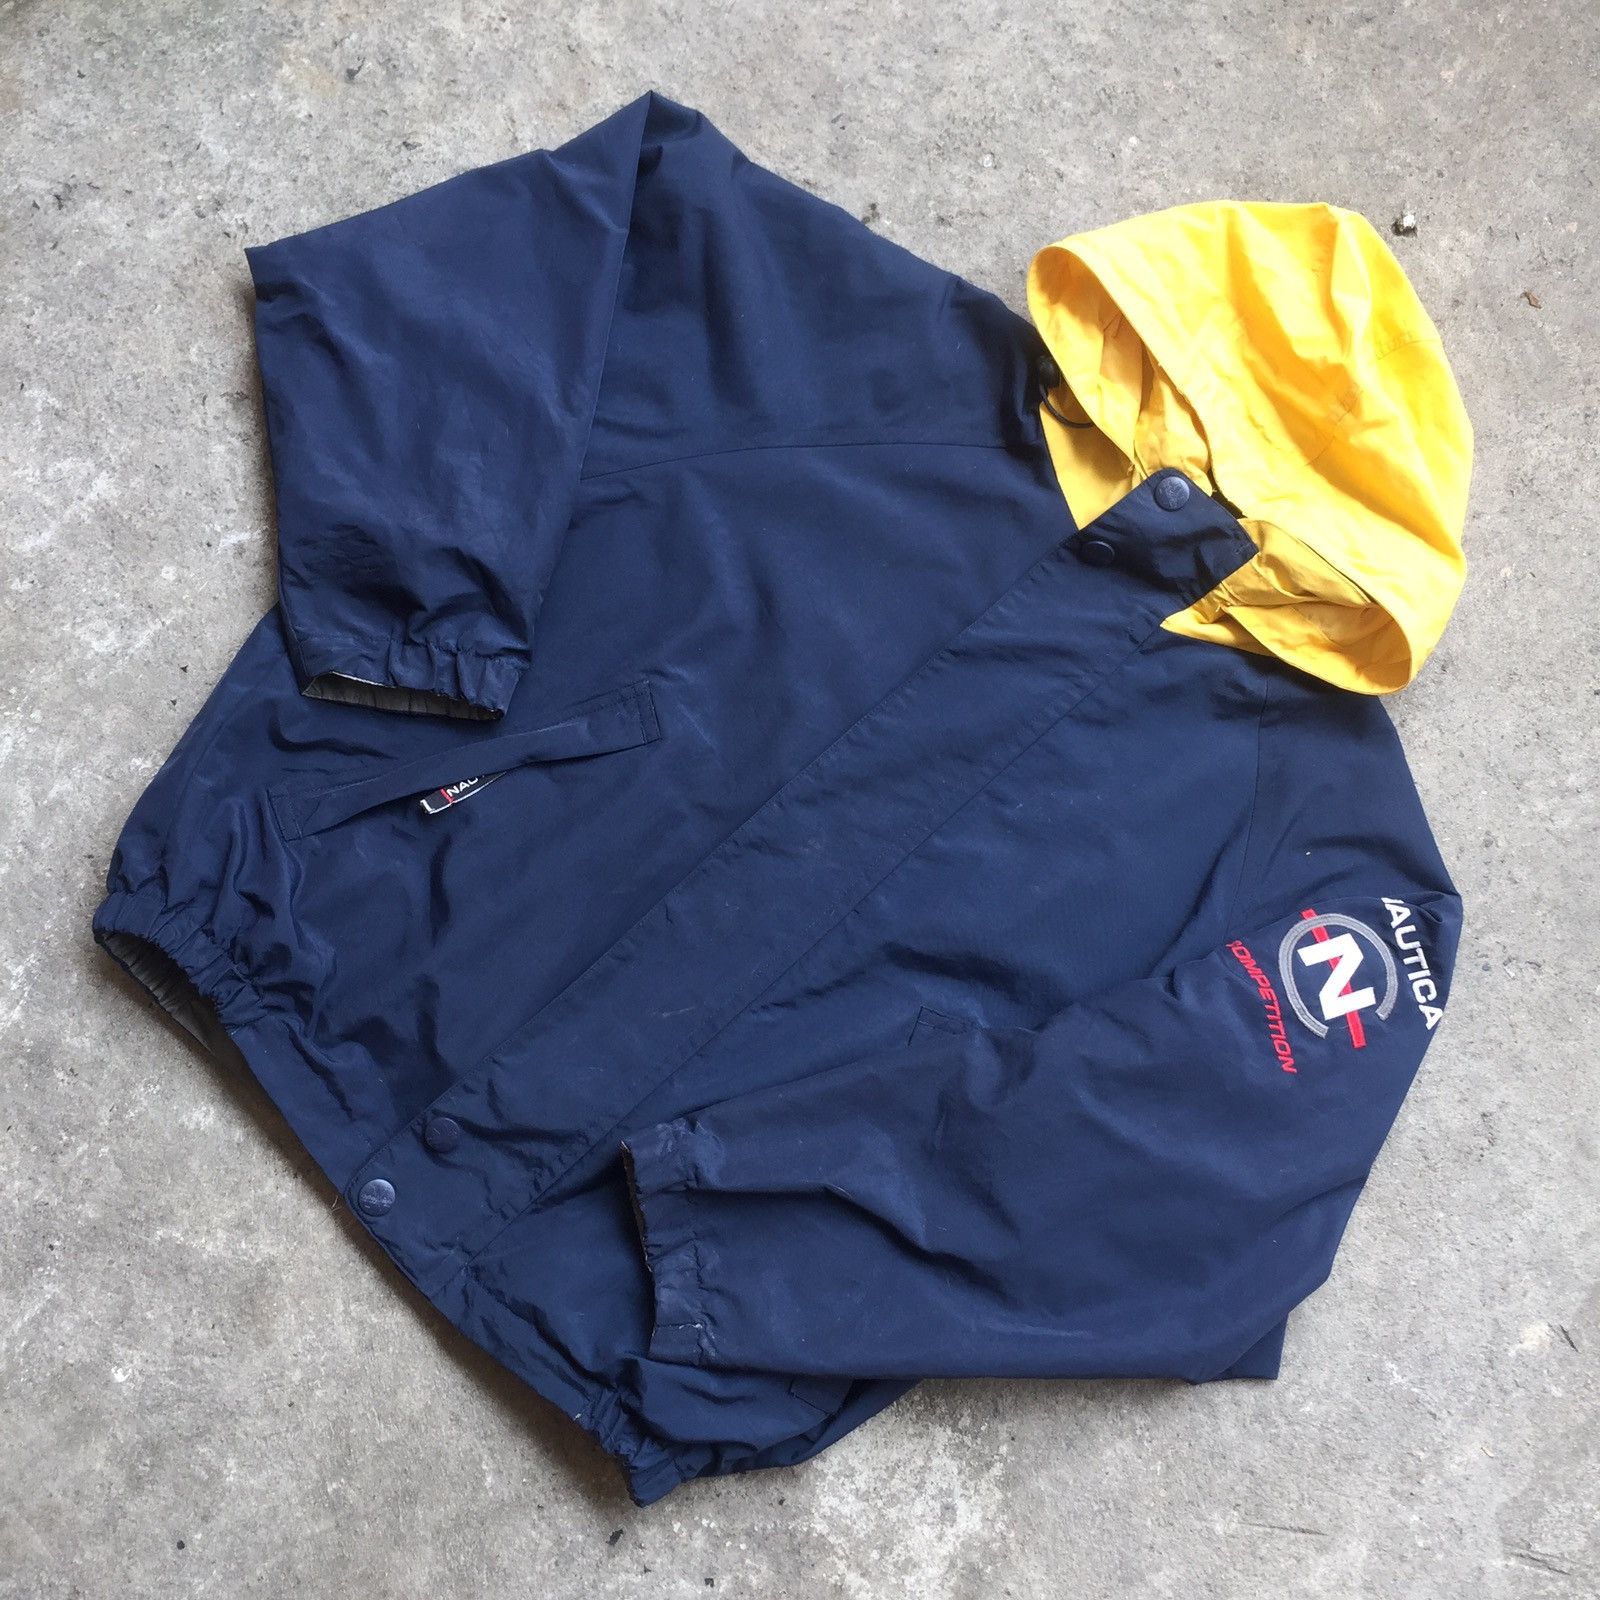 Vintage 90s Nautica competition sailing gear reversible jacket Size S/L - 1